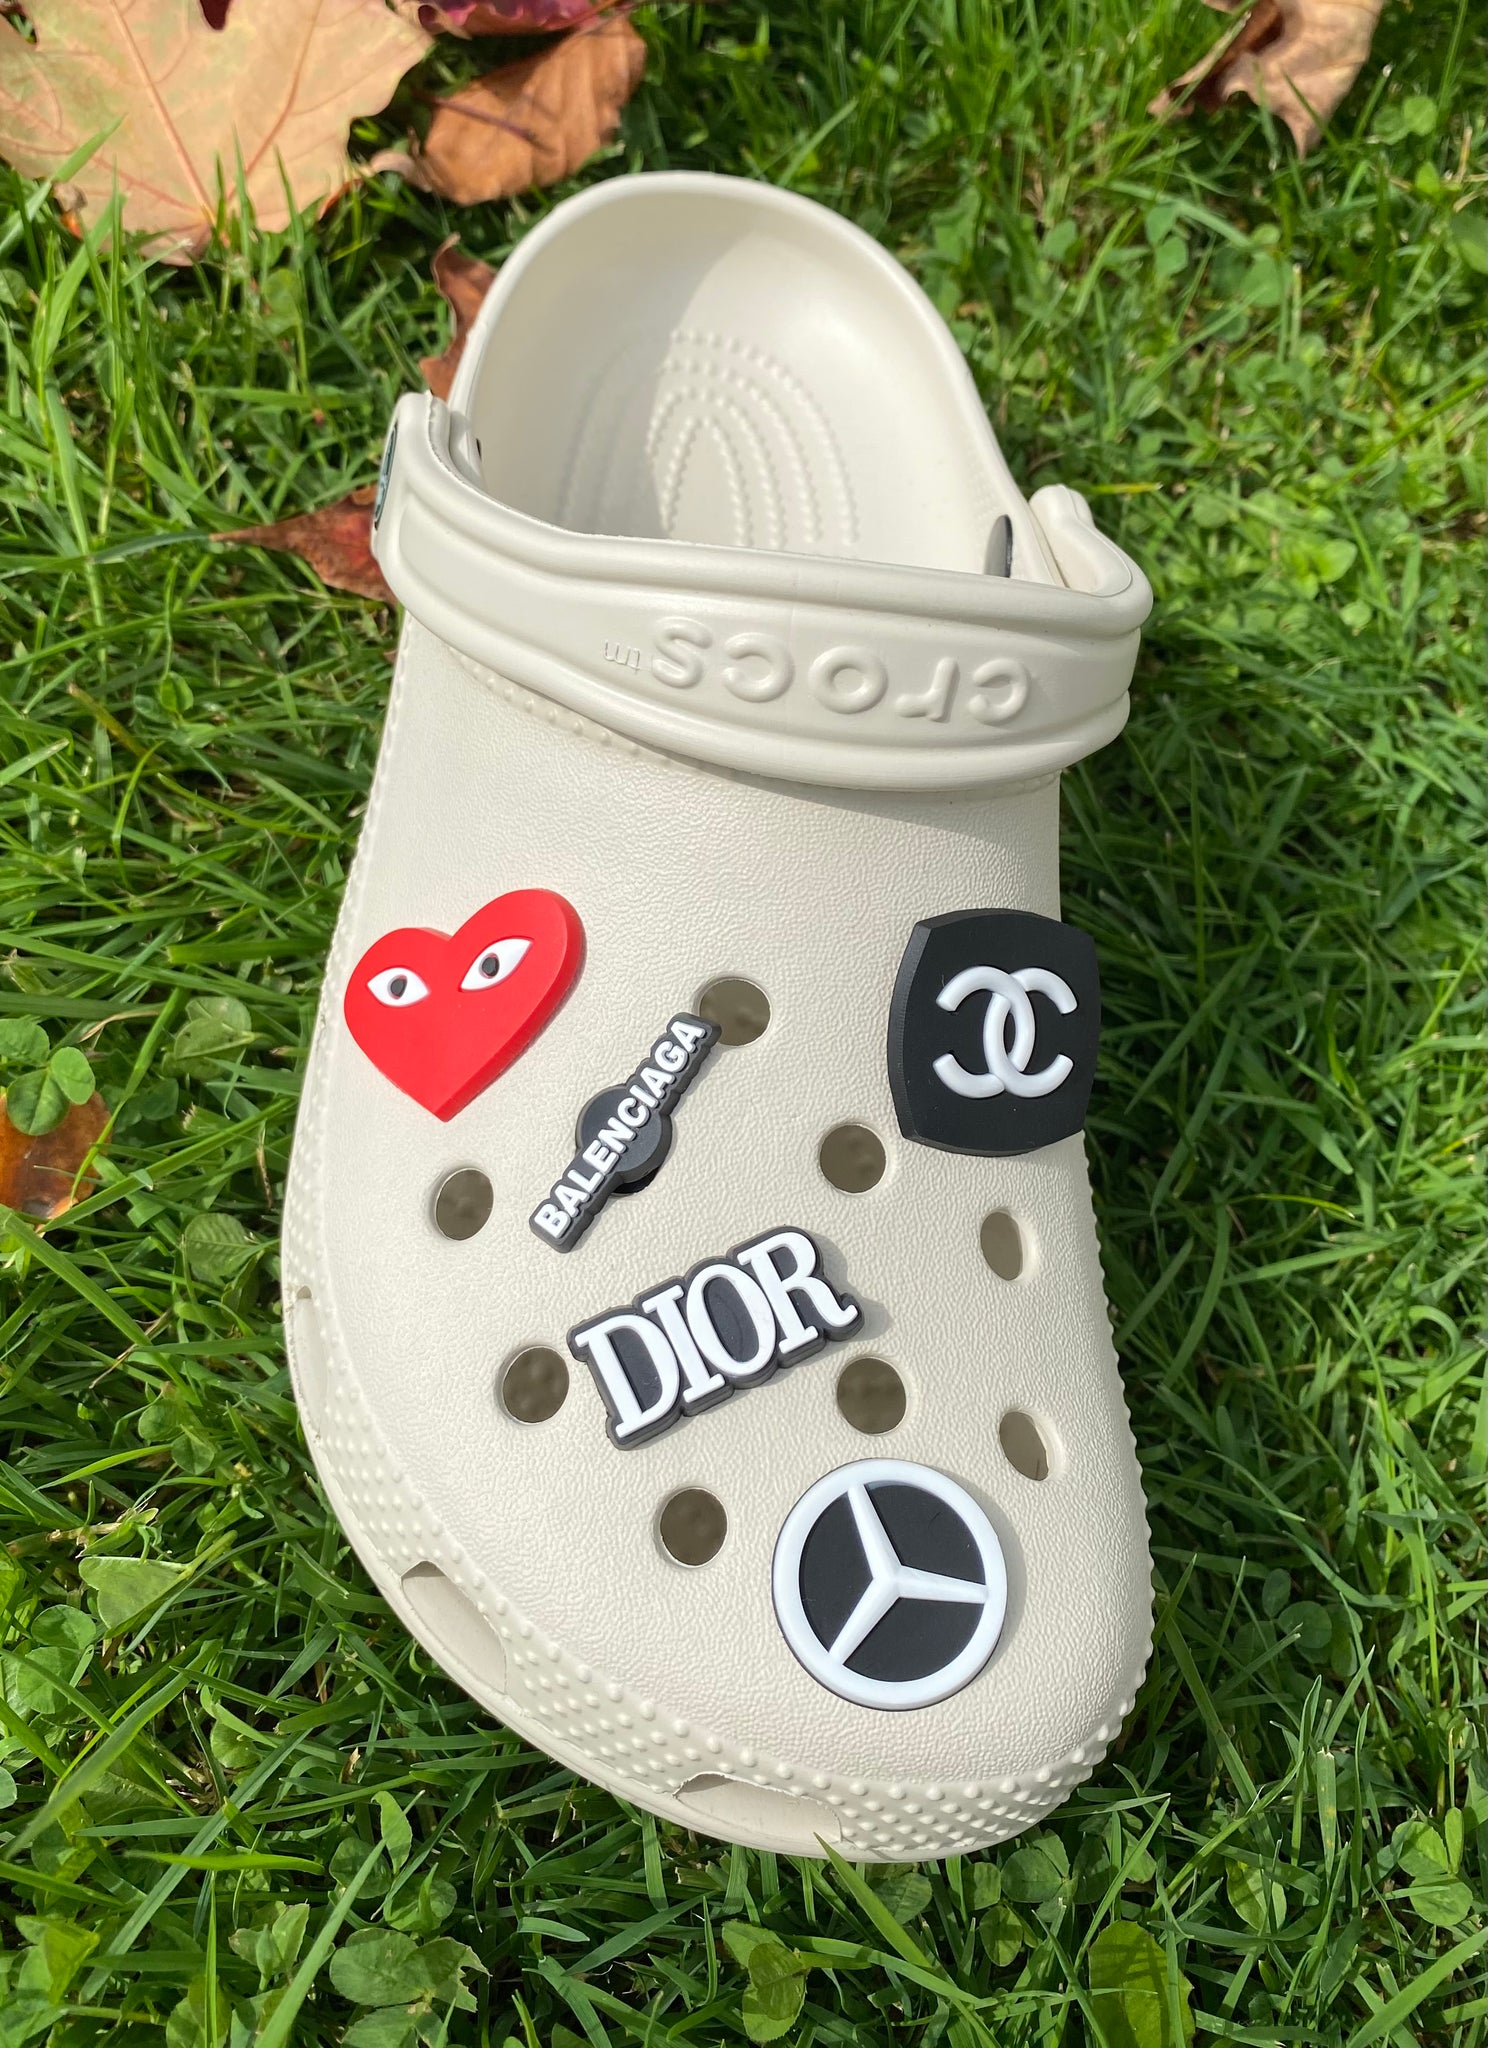 Designer jibbitz for crocs shoe charms